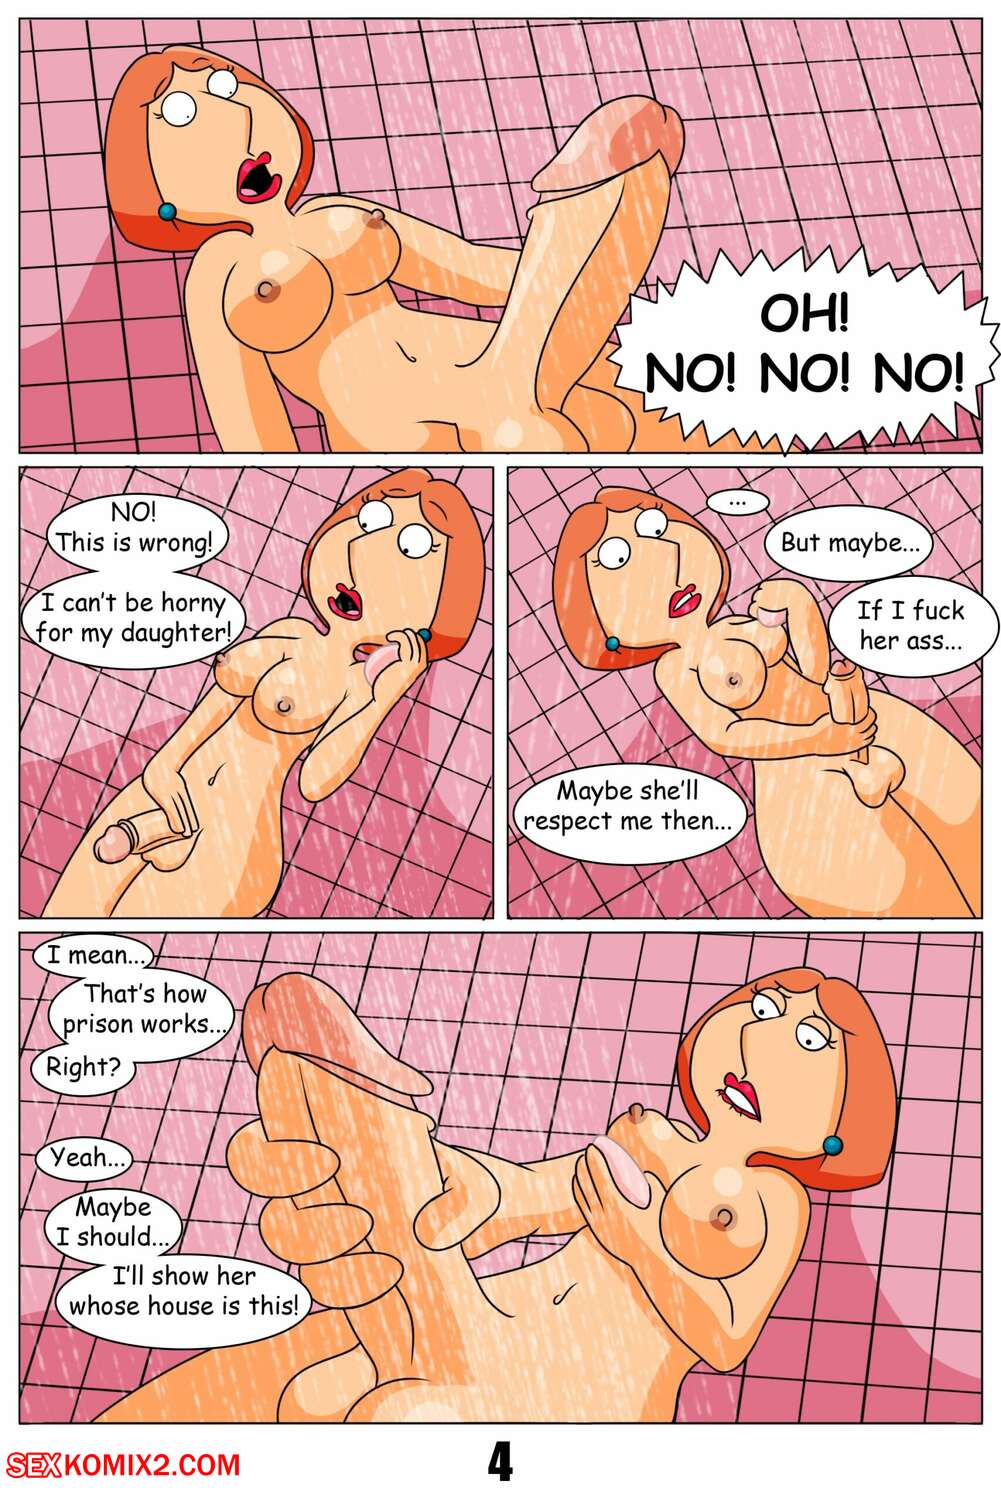 The great muff porn comic